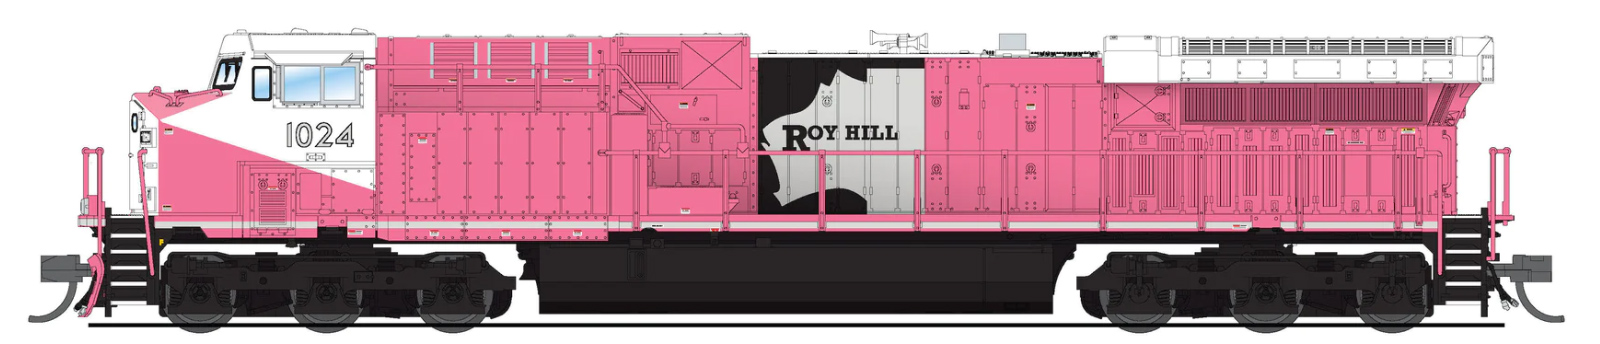 Roy Hill Mining